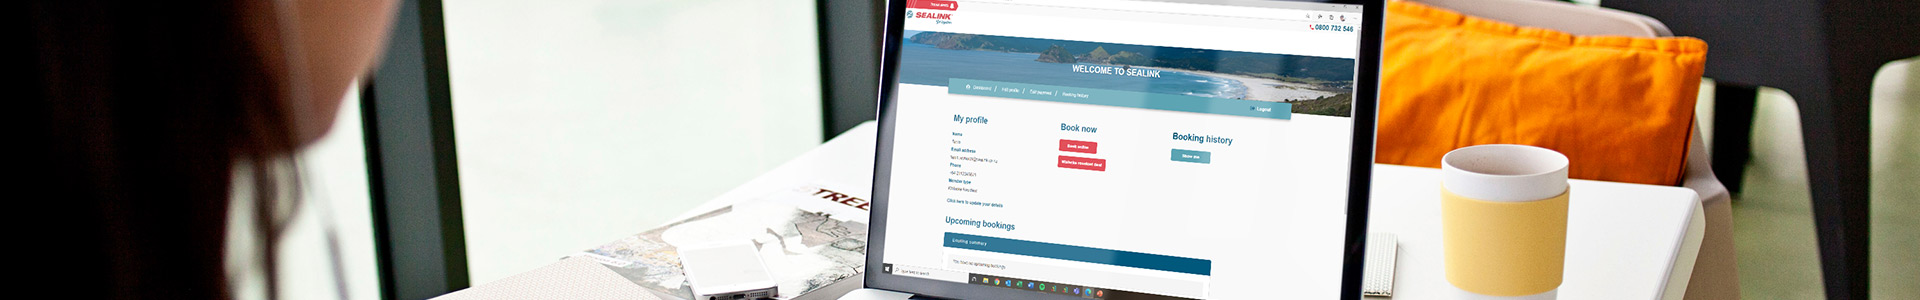 SeaLink booking information header image - woman's hands working on computer